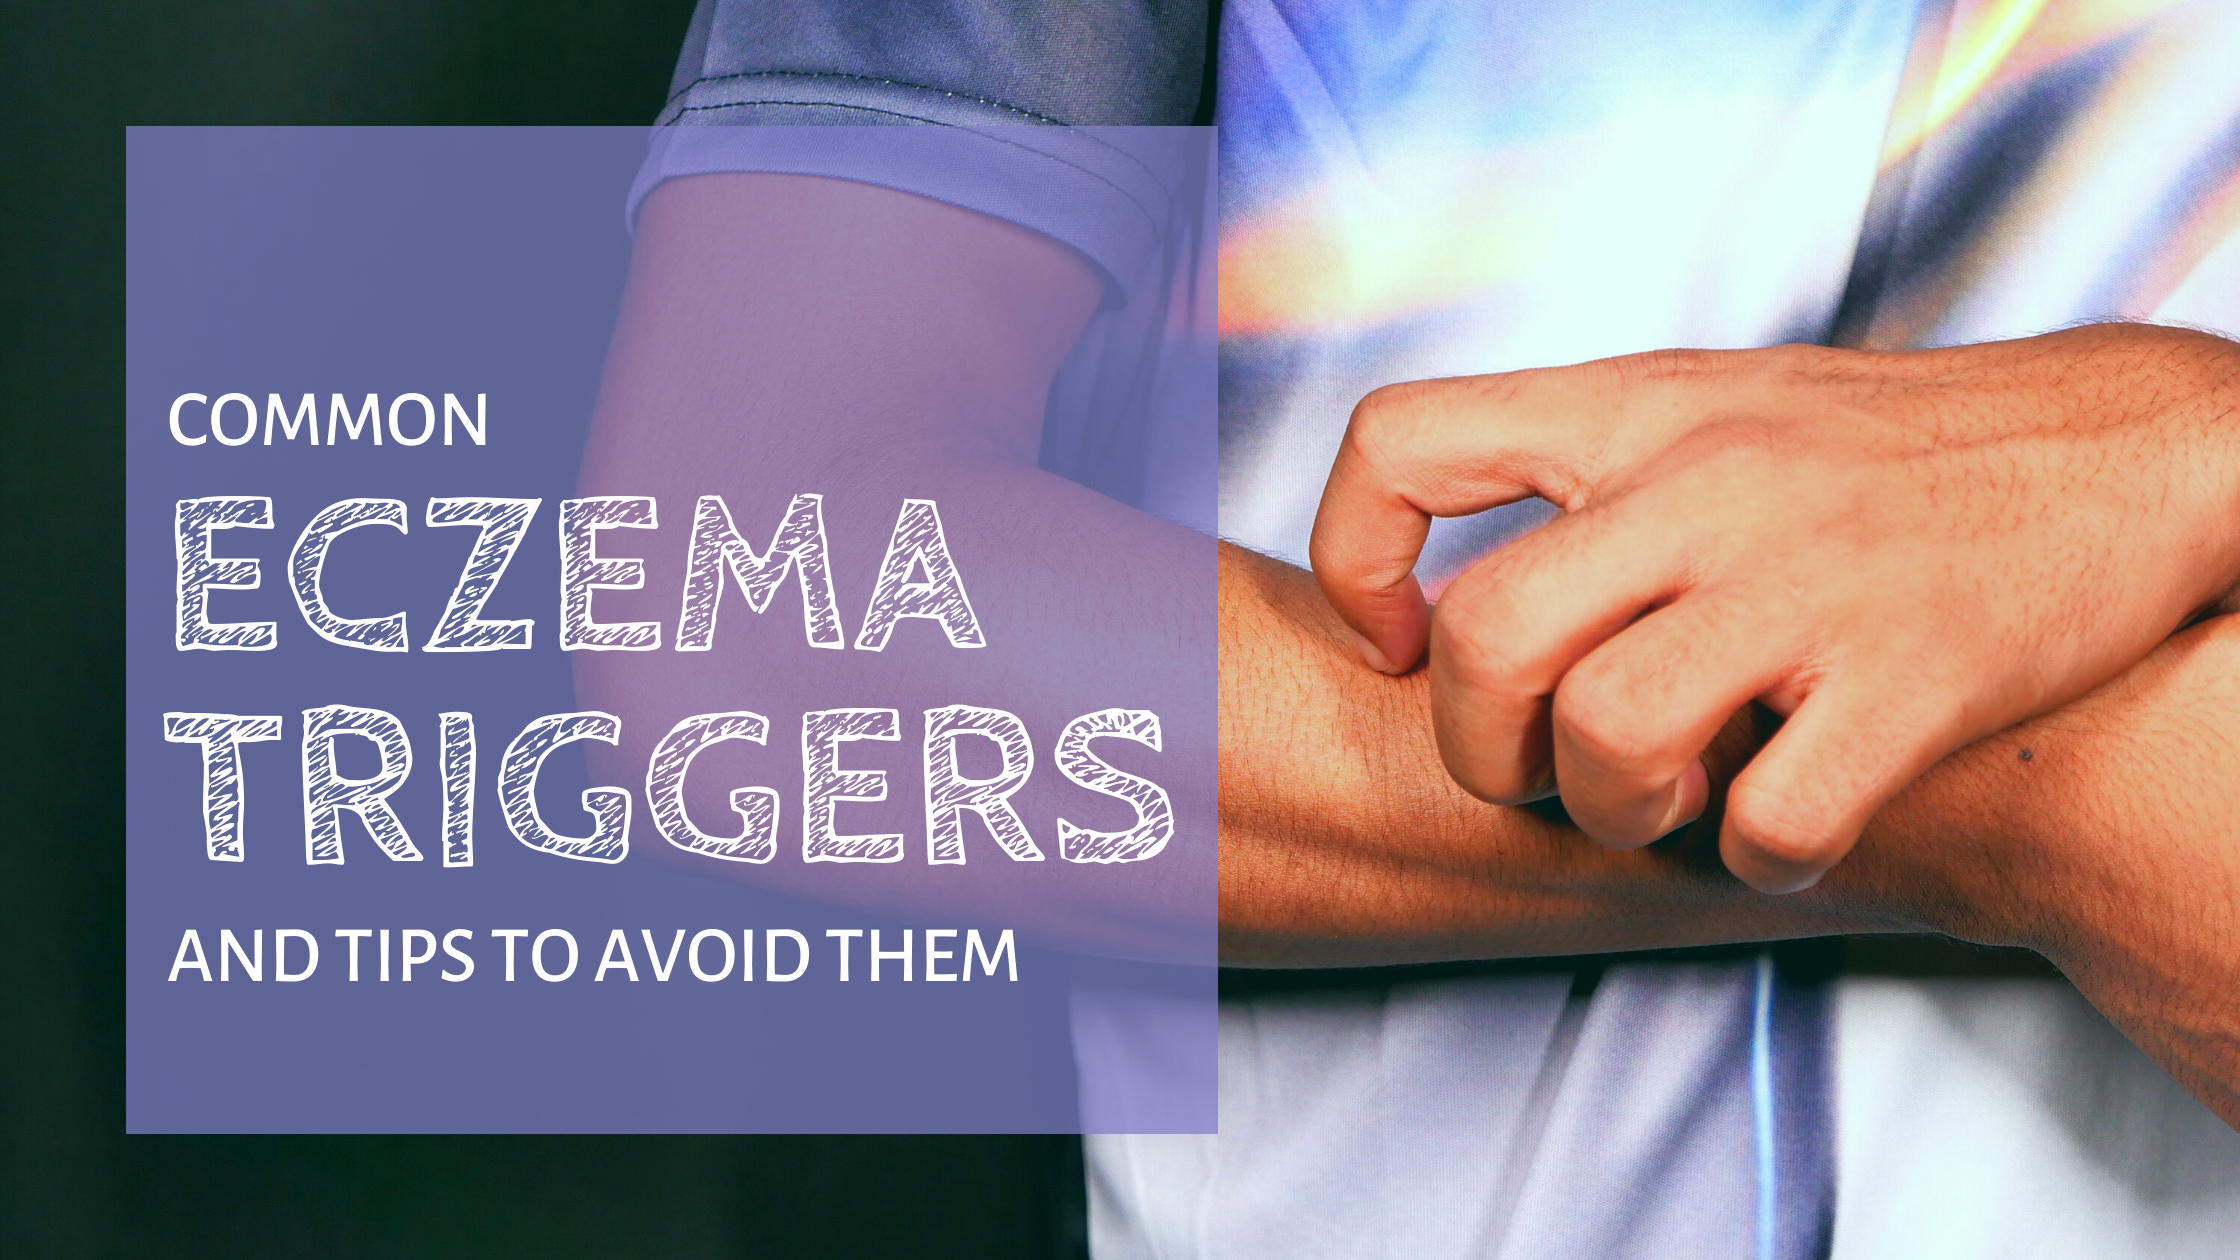 Eczema triggers